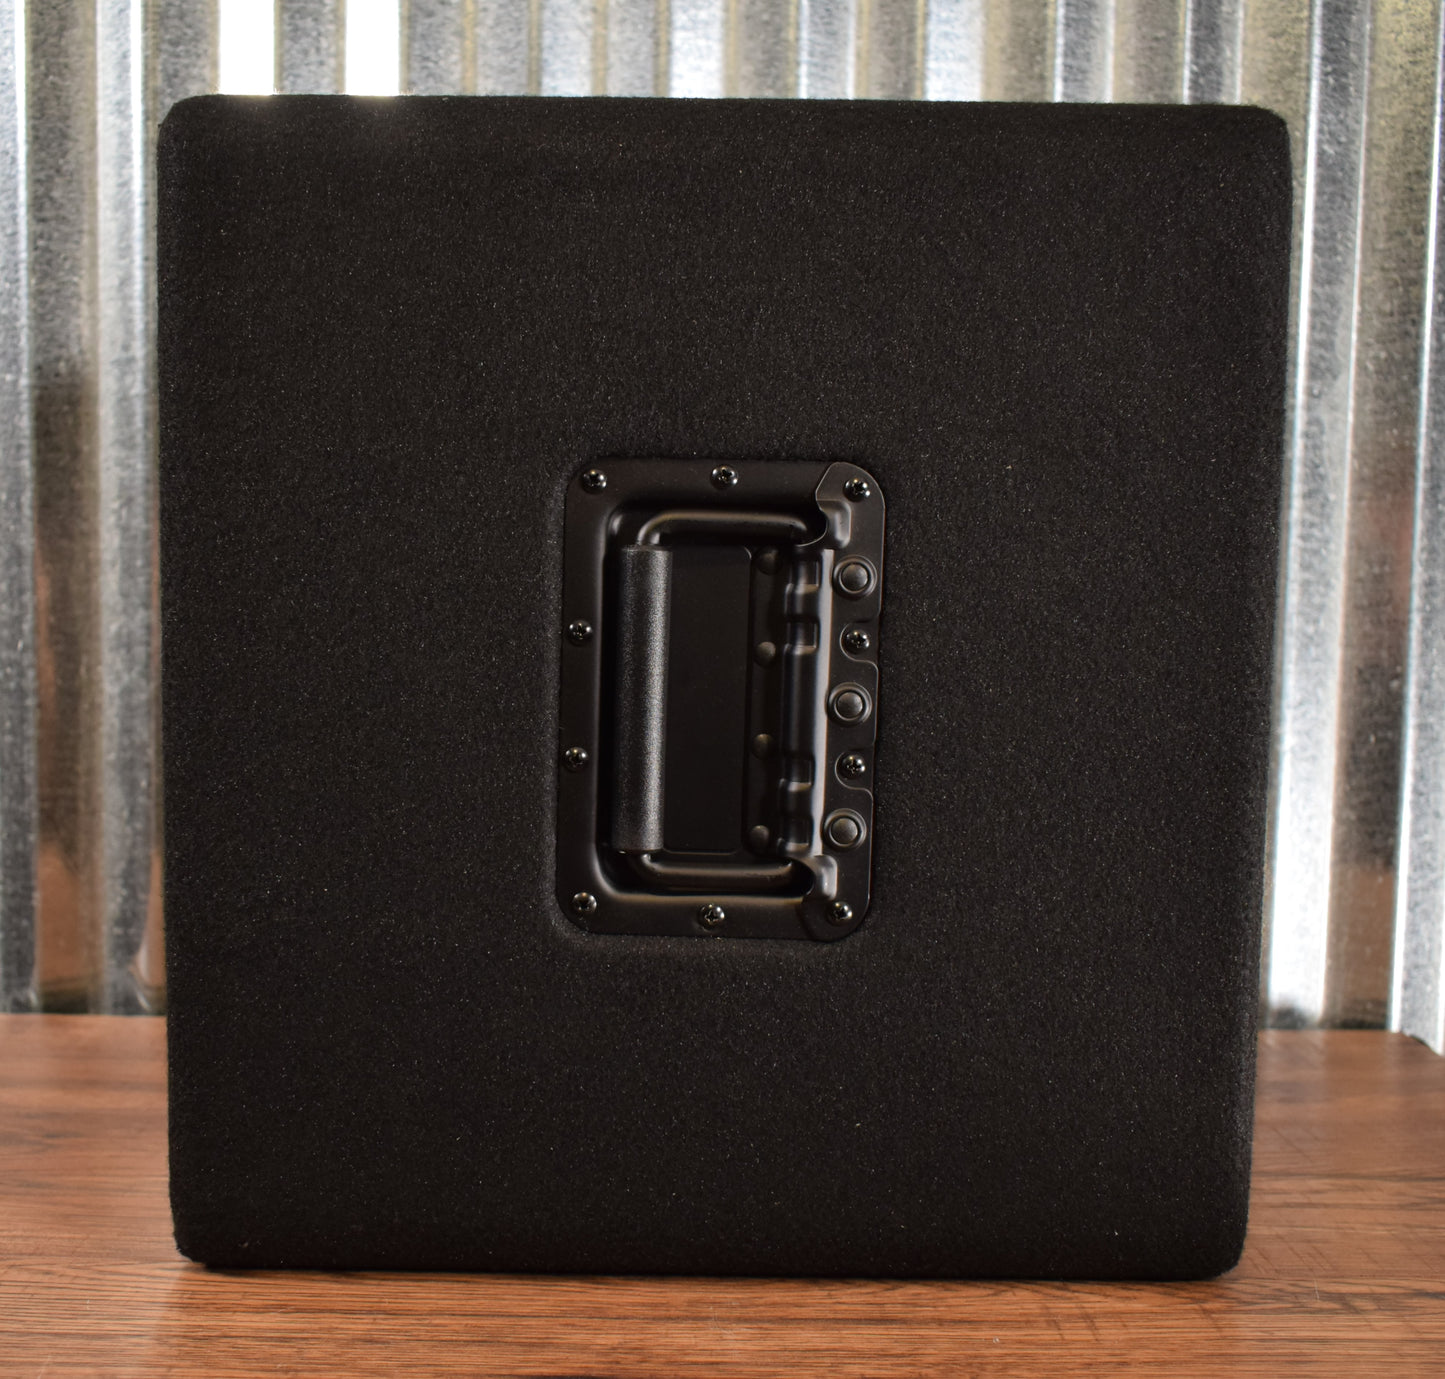 Ashdown Engineering OR-110 Original-110 1x10" Lightweight Bass Amplifier Speaker Cabinet Demo